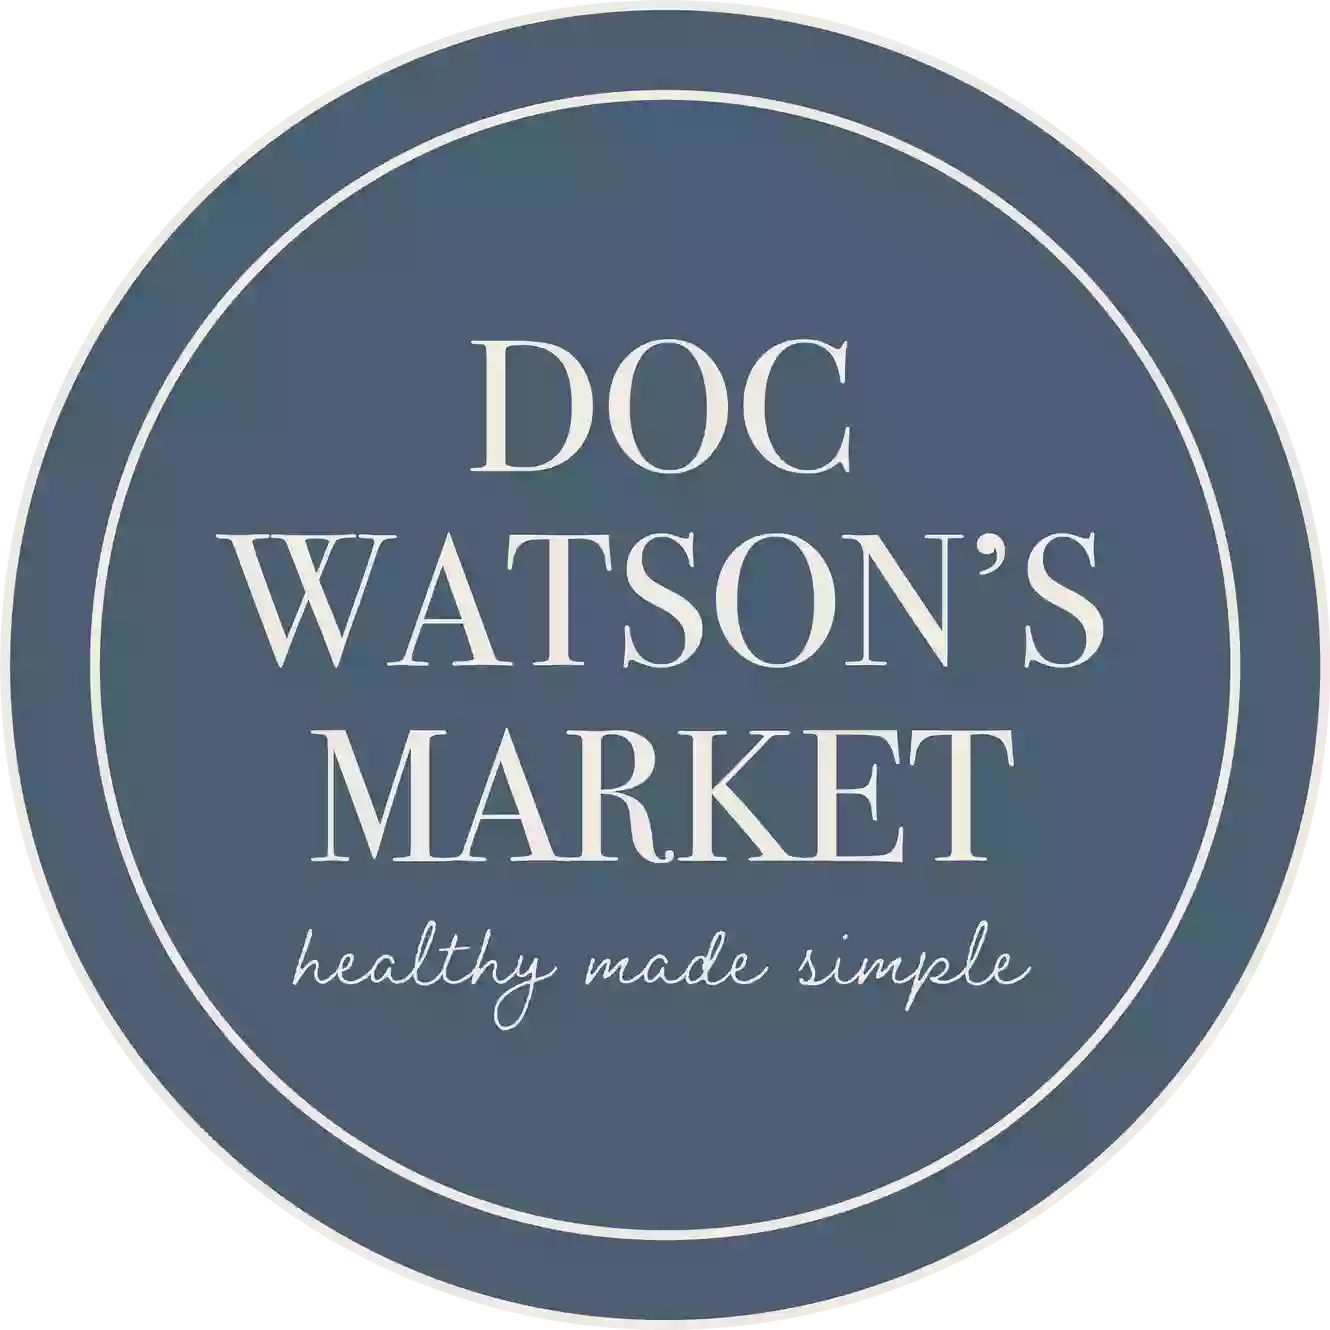 Doc Watson's Market